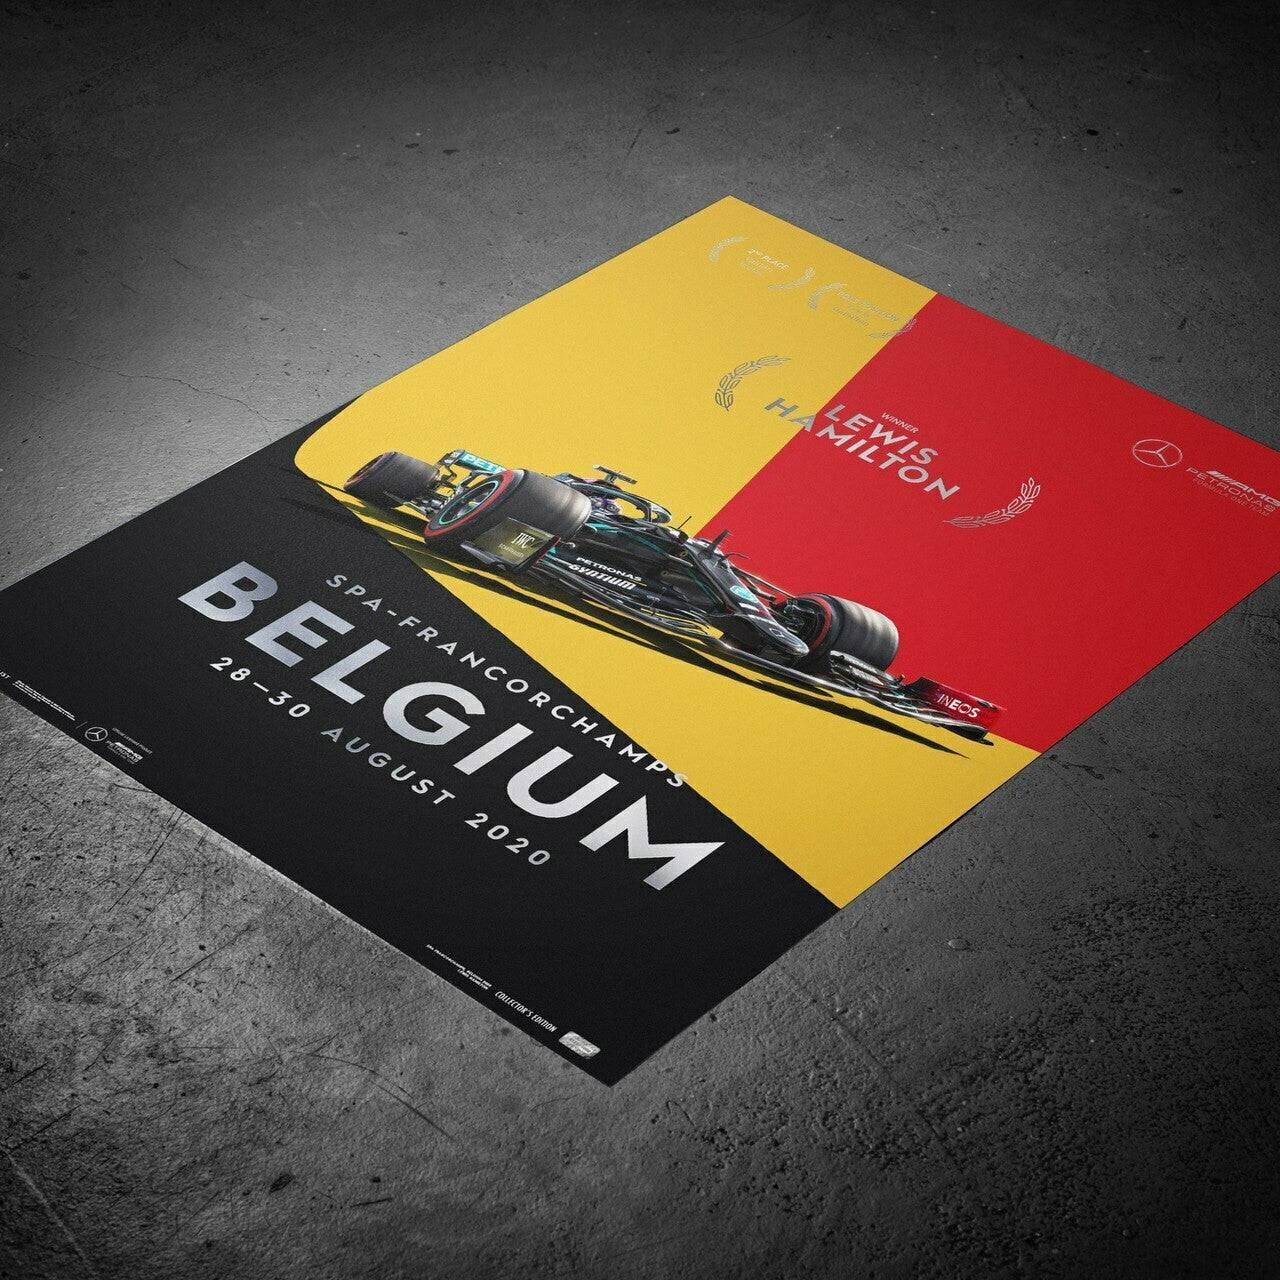 Mercedes-AMG Petronas F1 Team - Belgium 2020 - Lewis Hamilton | Collector’s Edition